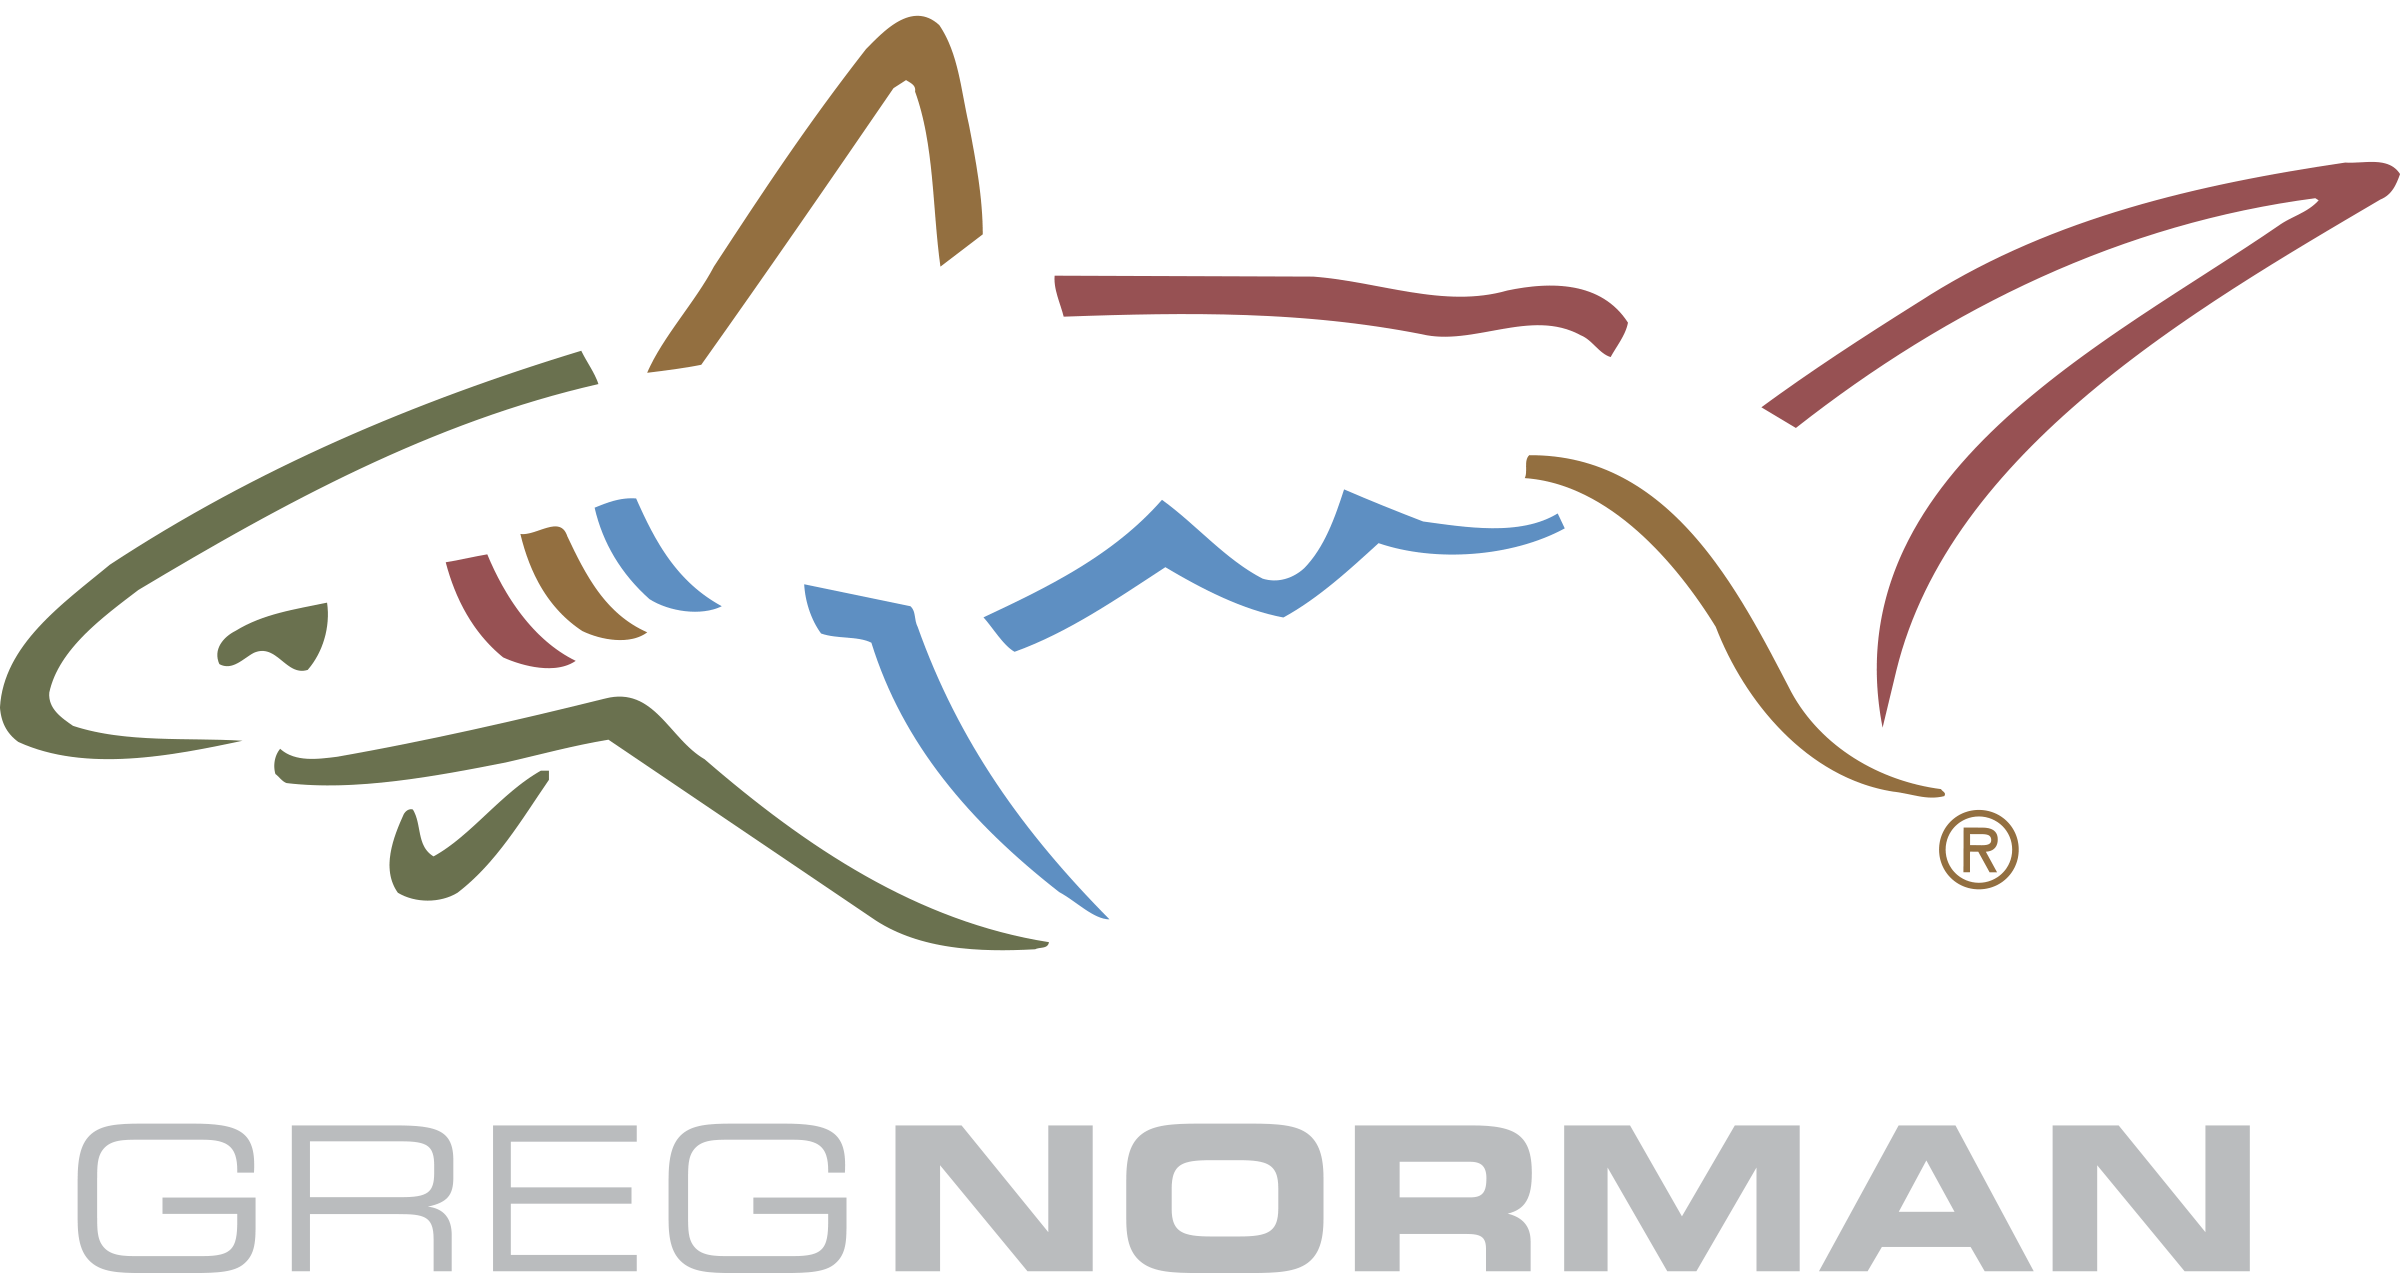 Greg Logo - Greg Norman The Shark Golf Shirts | Performance by Design